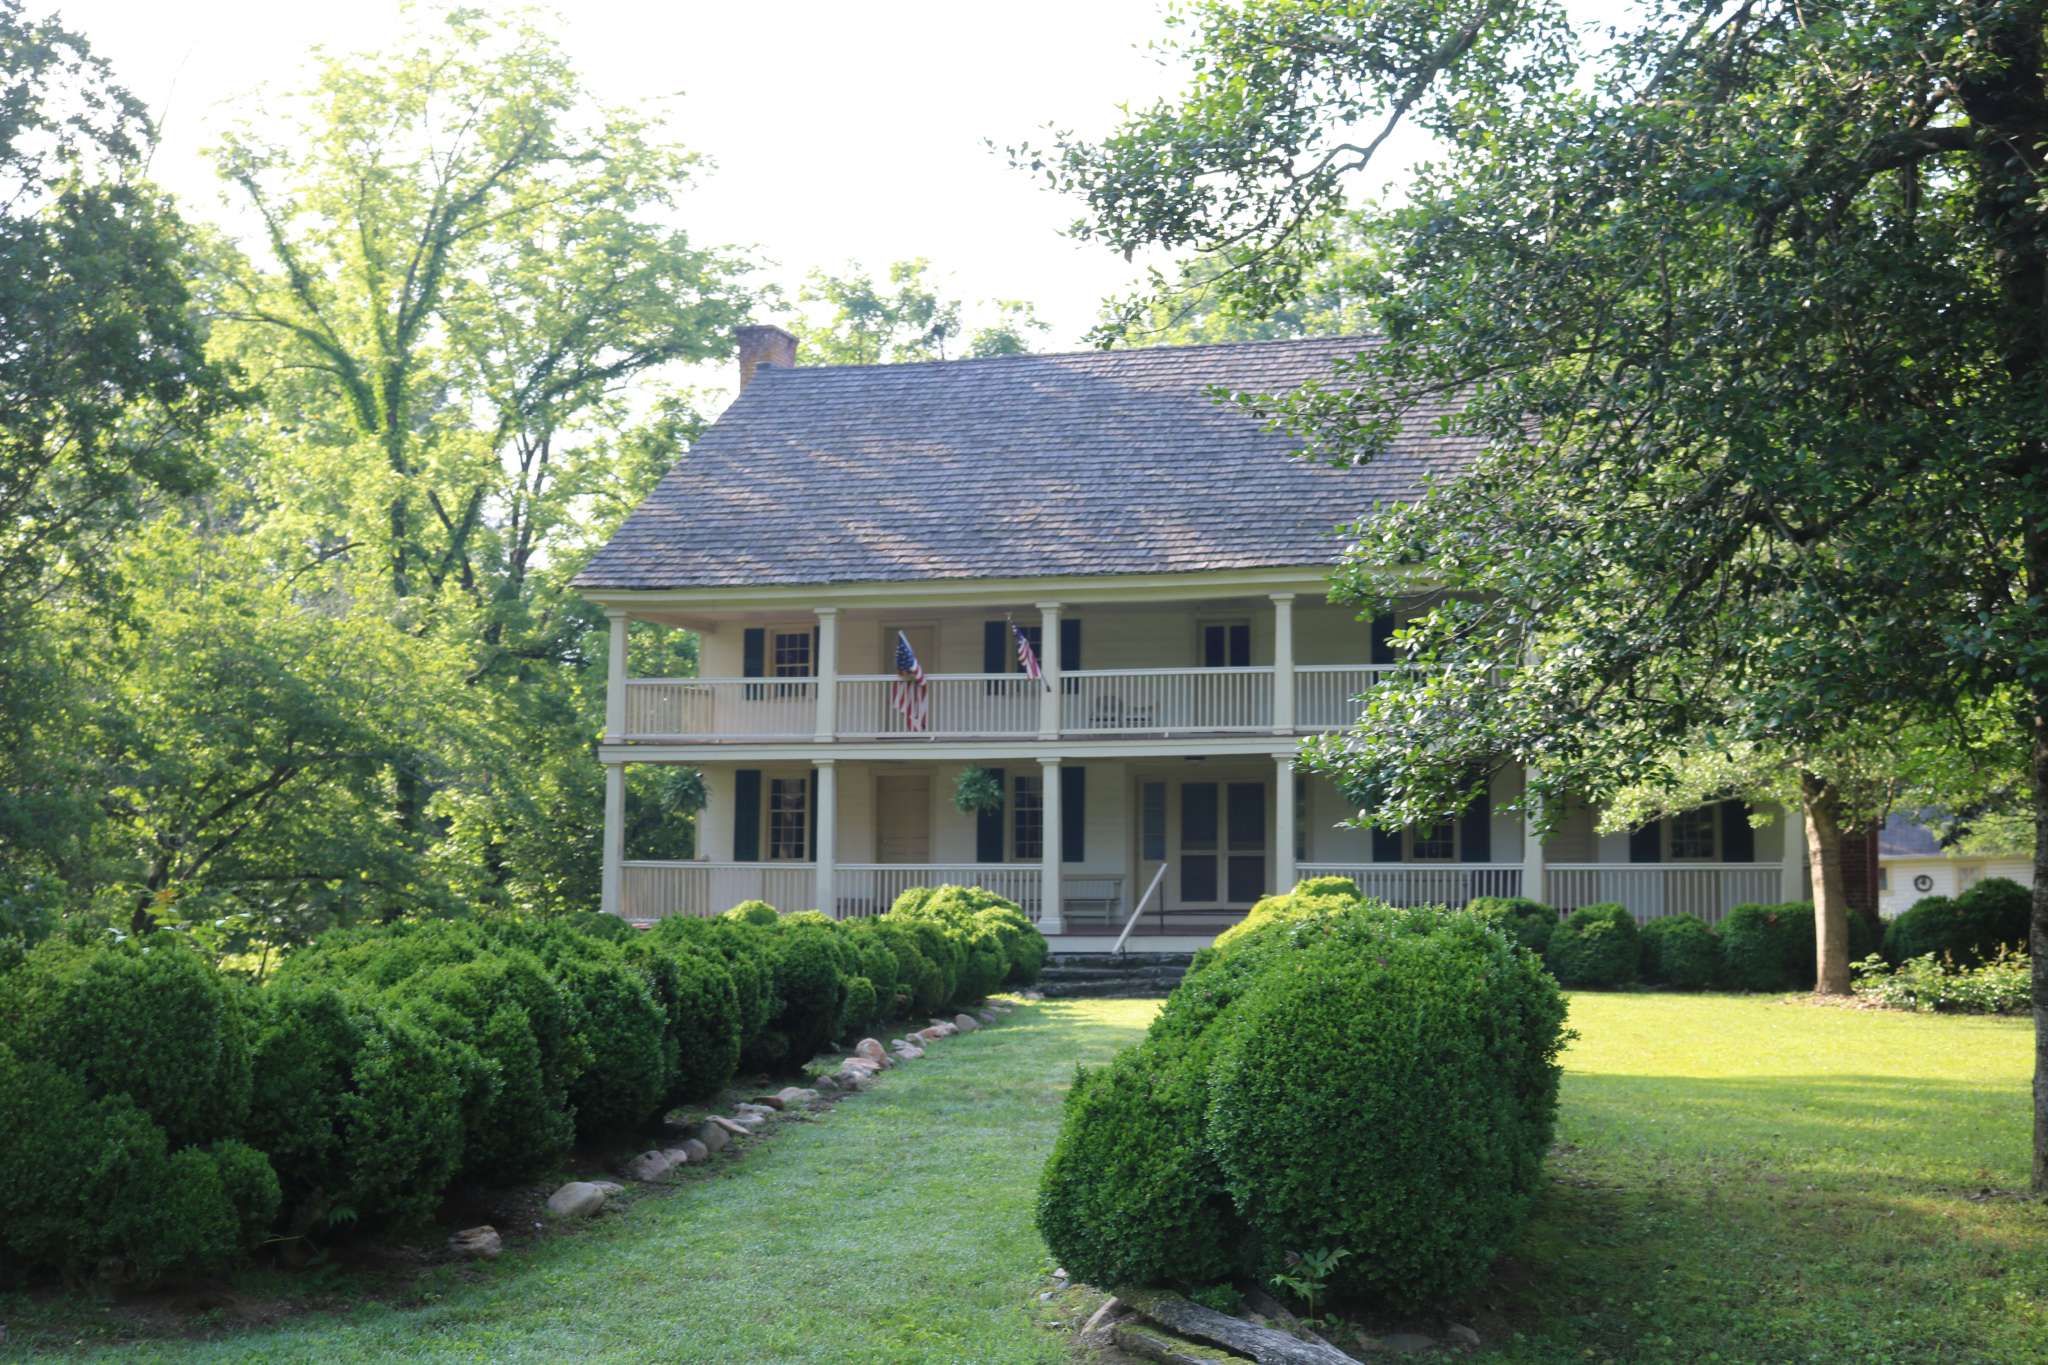 Historic Carson House, McDowell County, NC